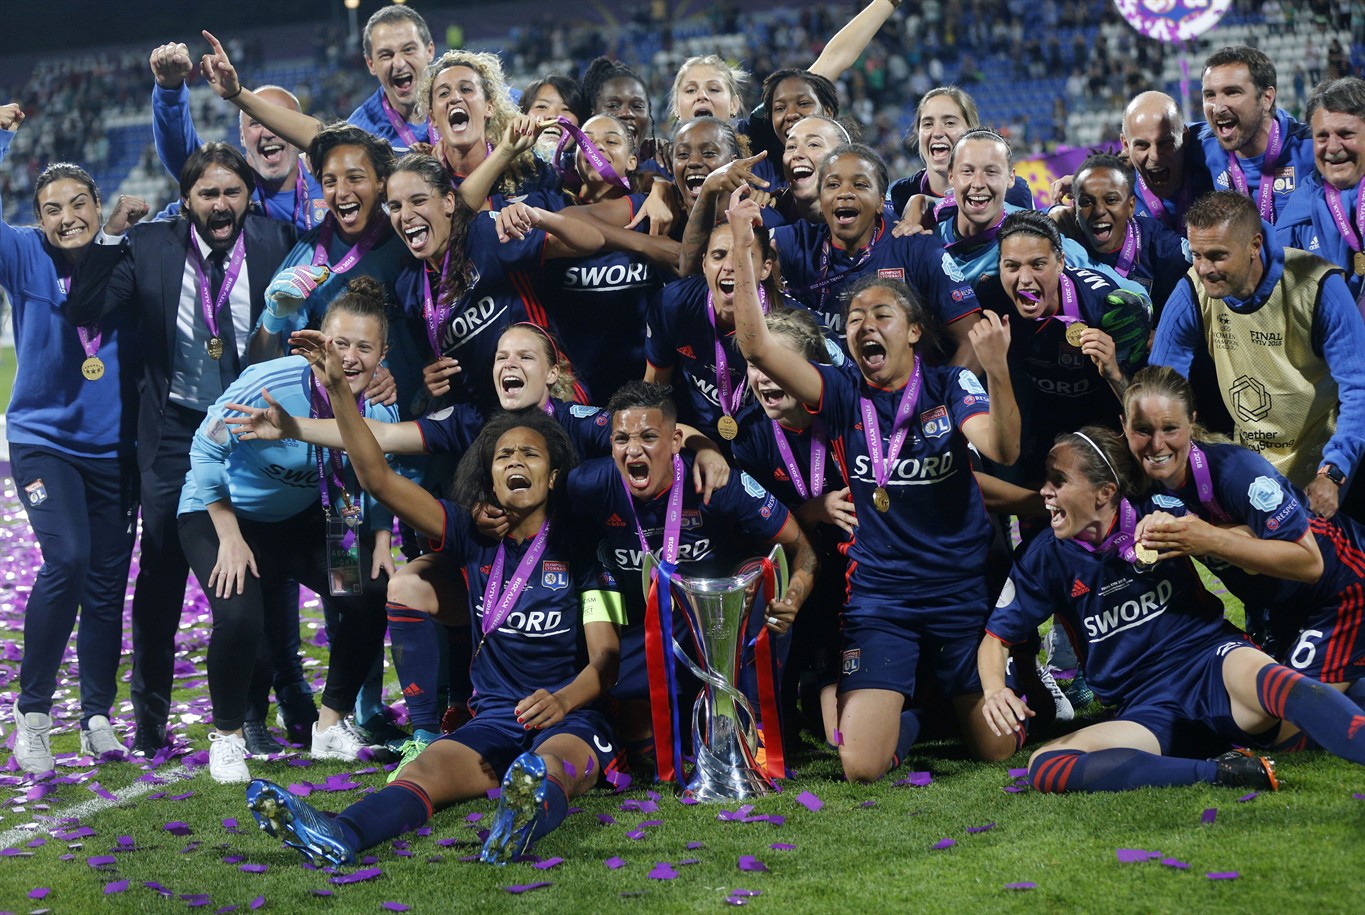 uefa women's champions league final 2018